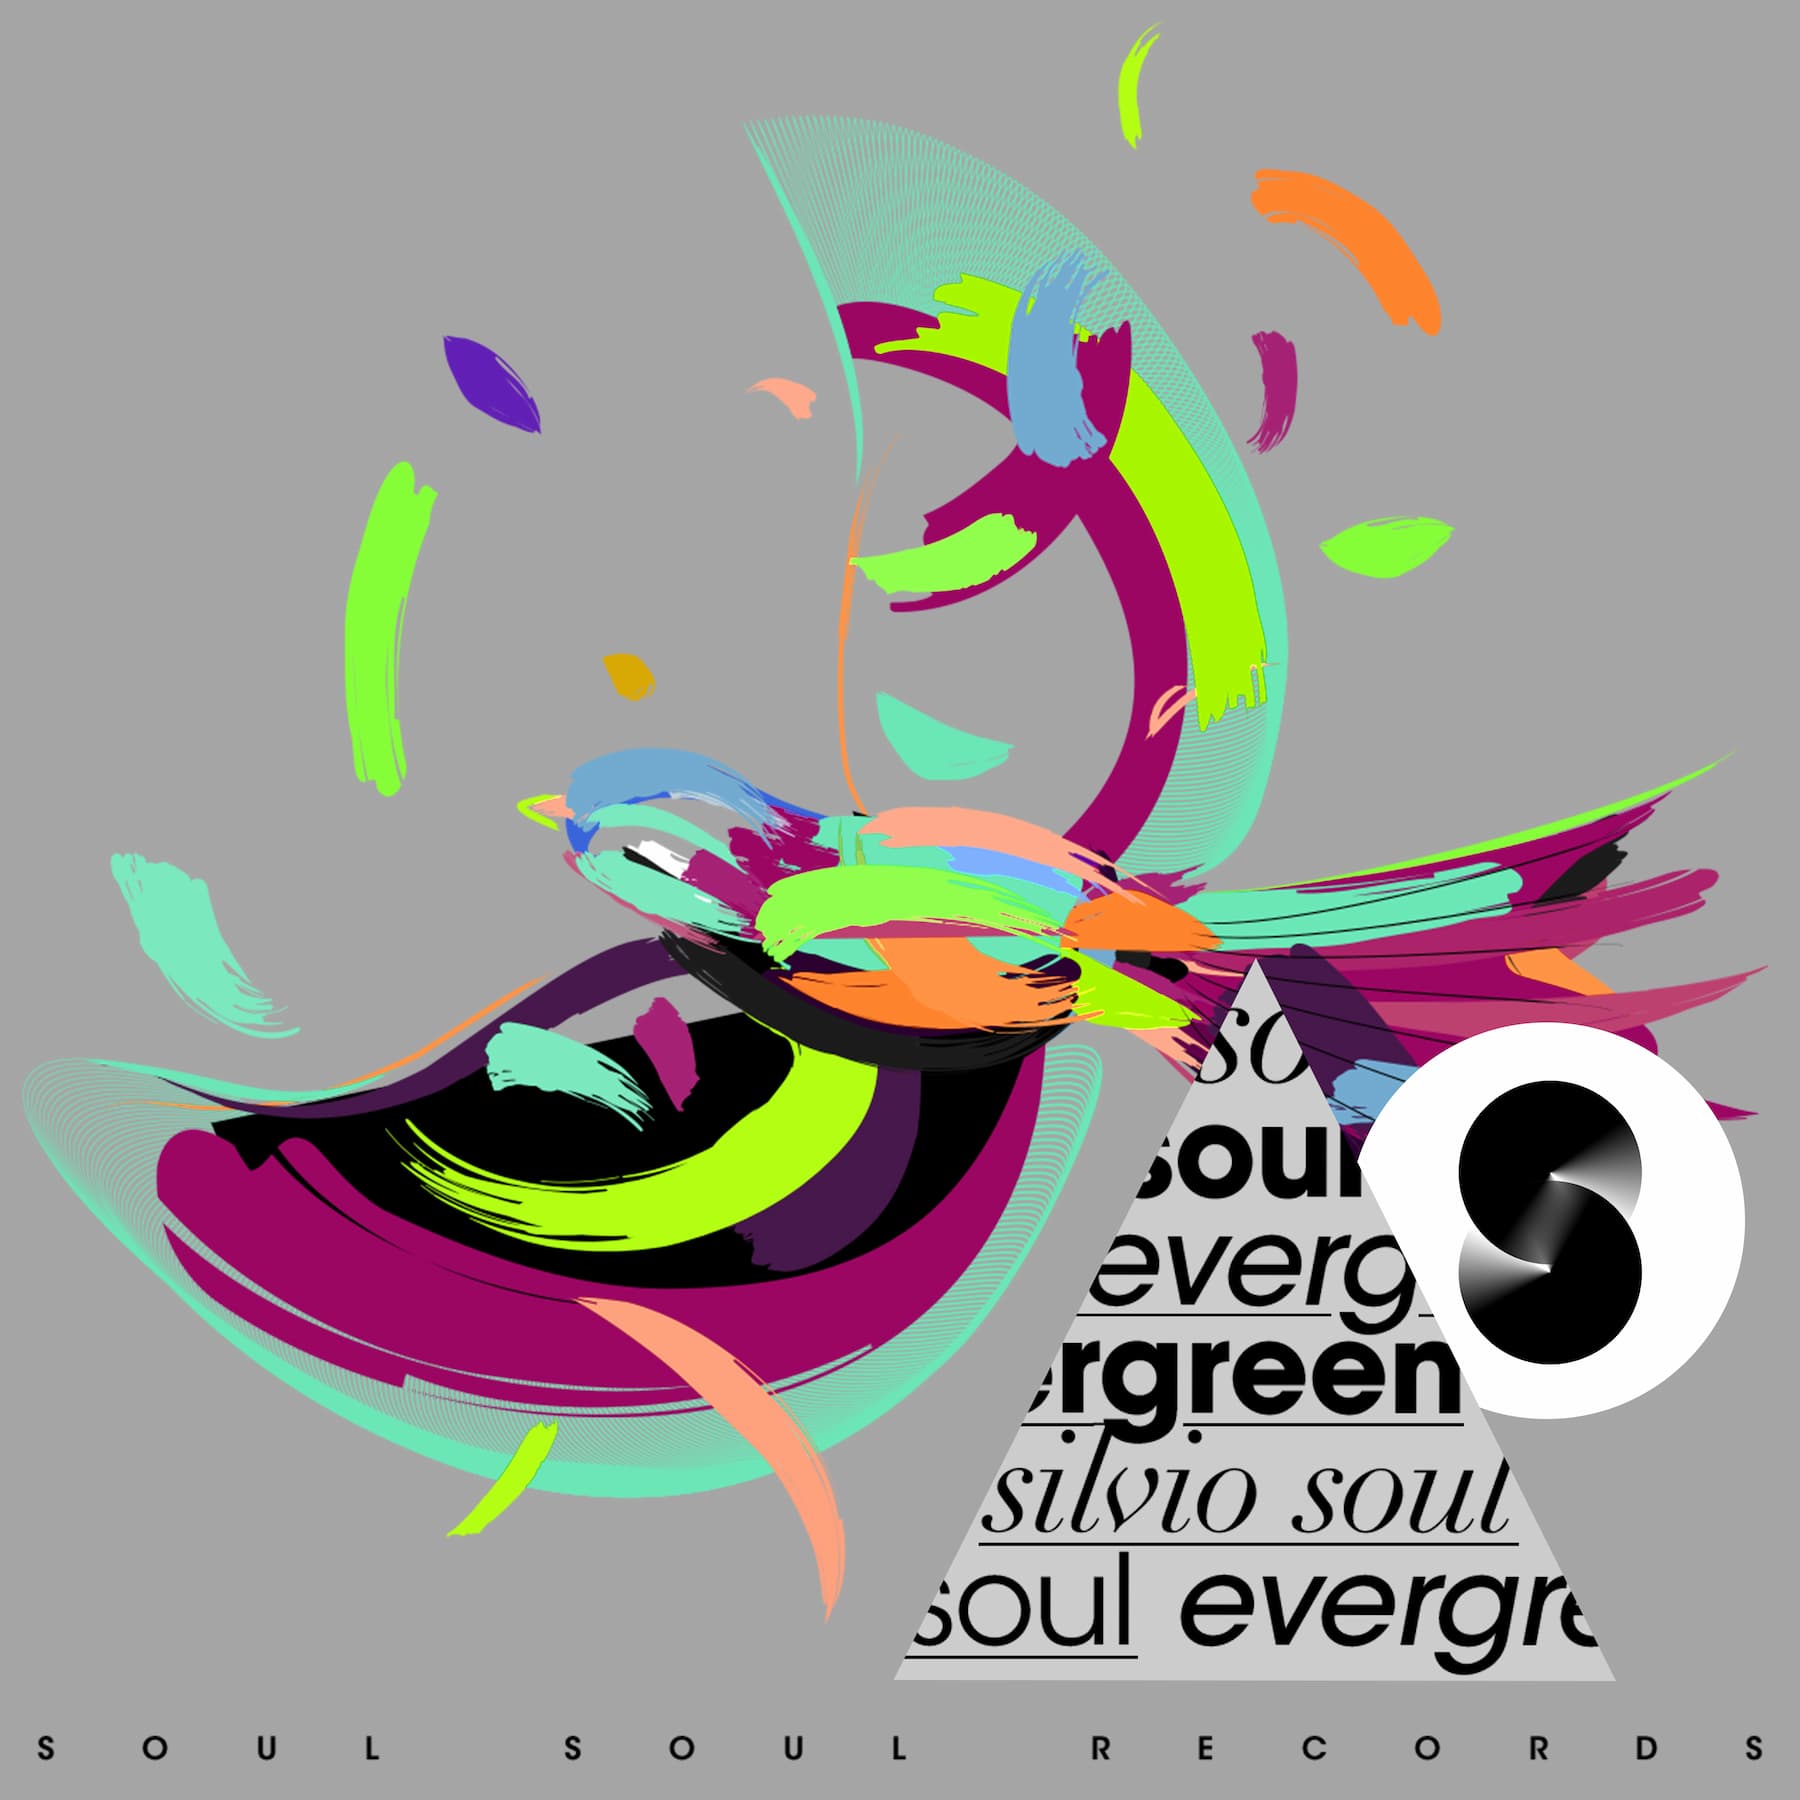 Silvio Soul apresenta EP "Evergreen" por sua label Soul Soul Records